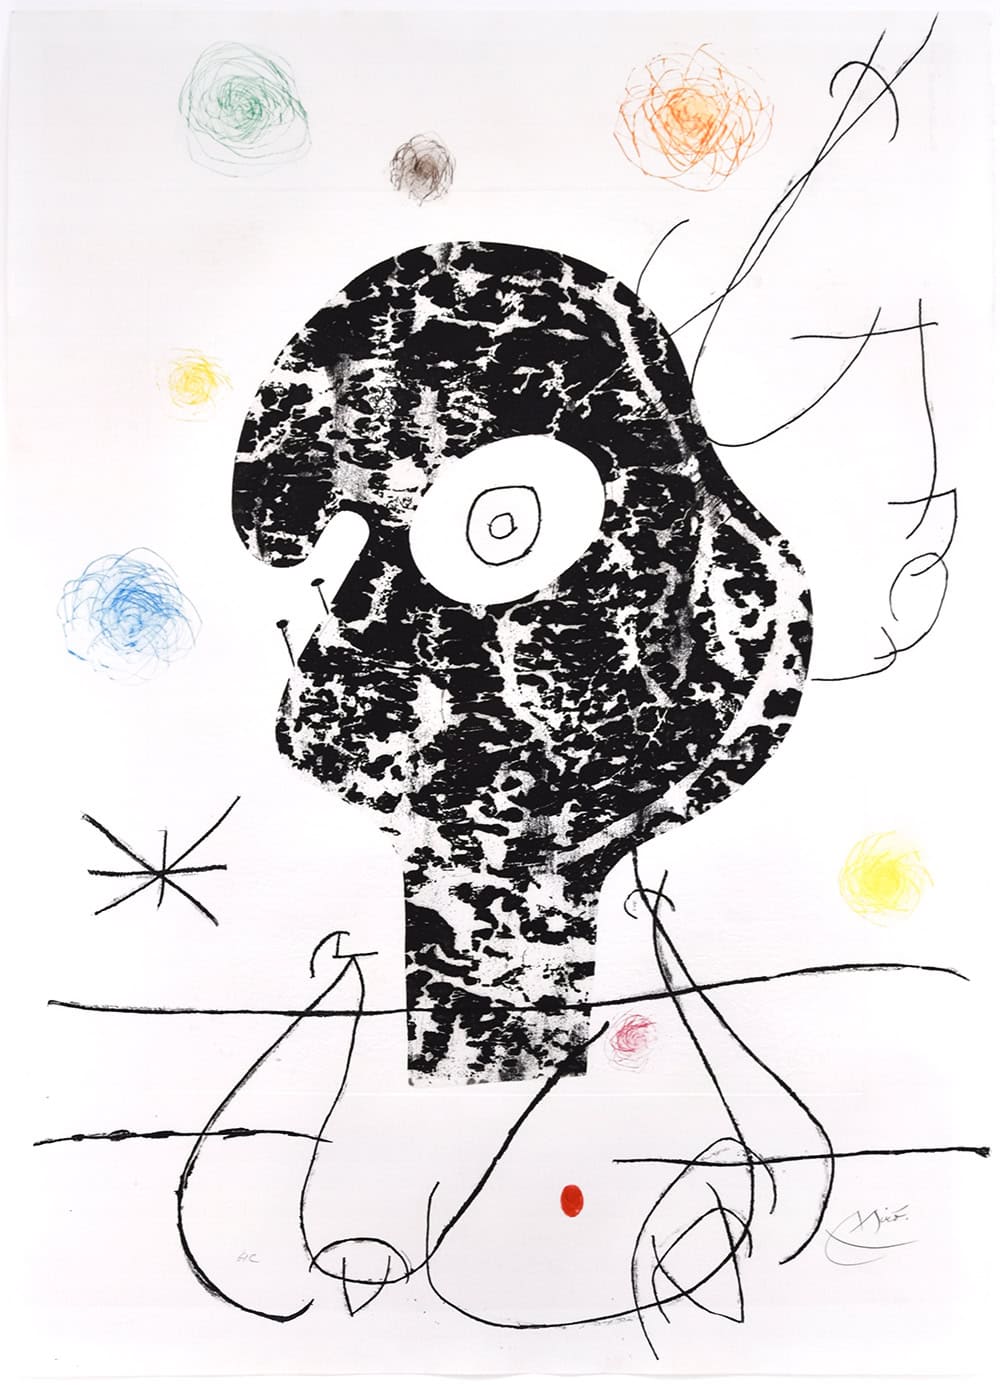 Joan Miró, Emehpylop (Cyclops), 1968